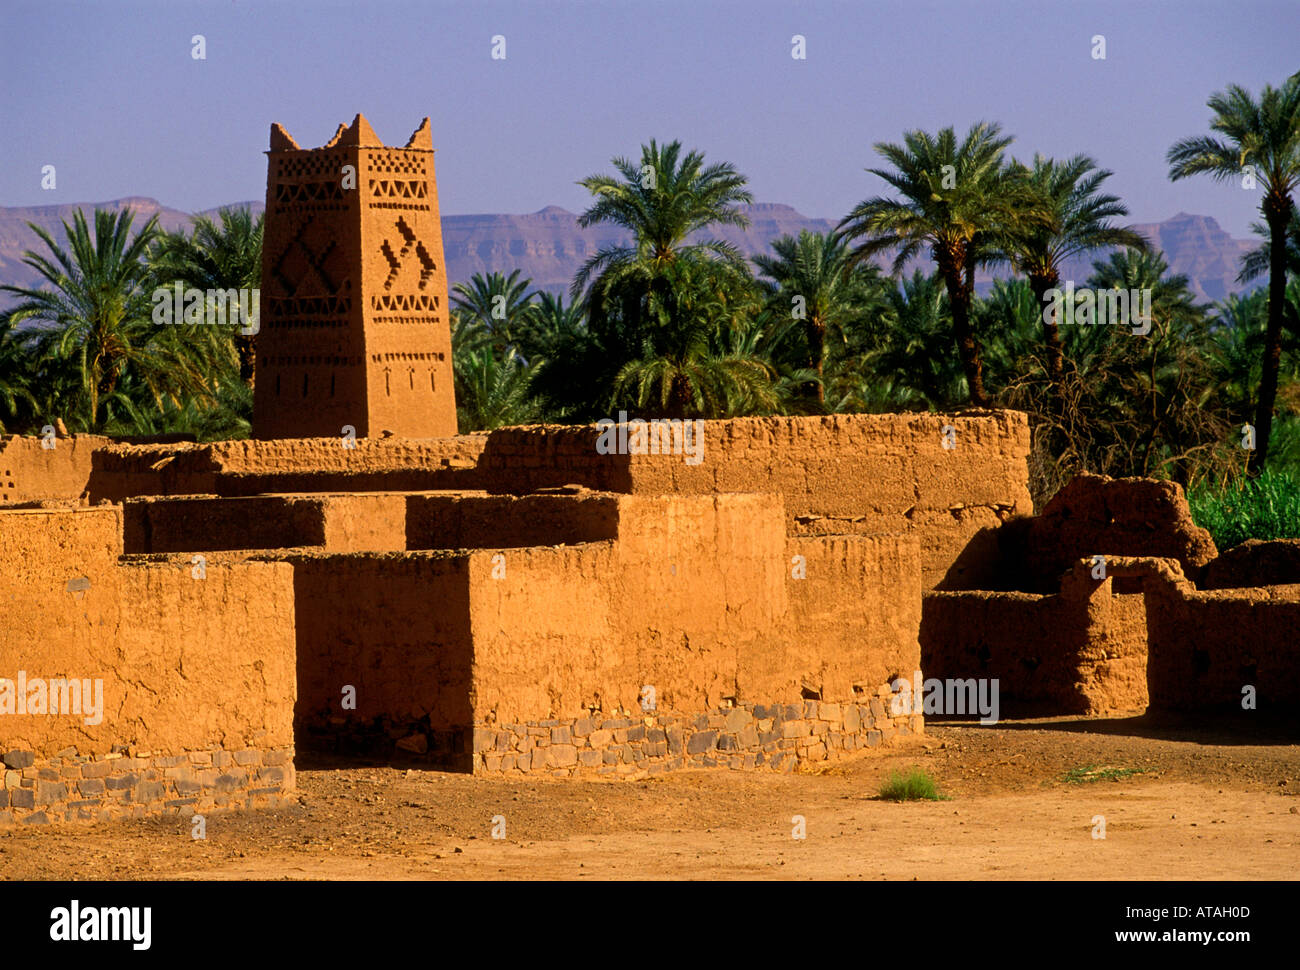 ksar, casbah, kasbah, castle, adobe building, northwest of town of Zagora, Zagora, Draa Valley, Draa River Valley, Morocco, Africa Stock Photo